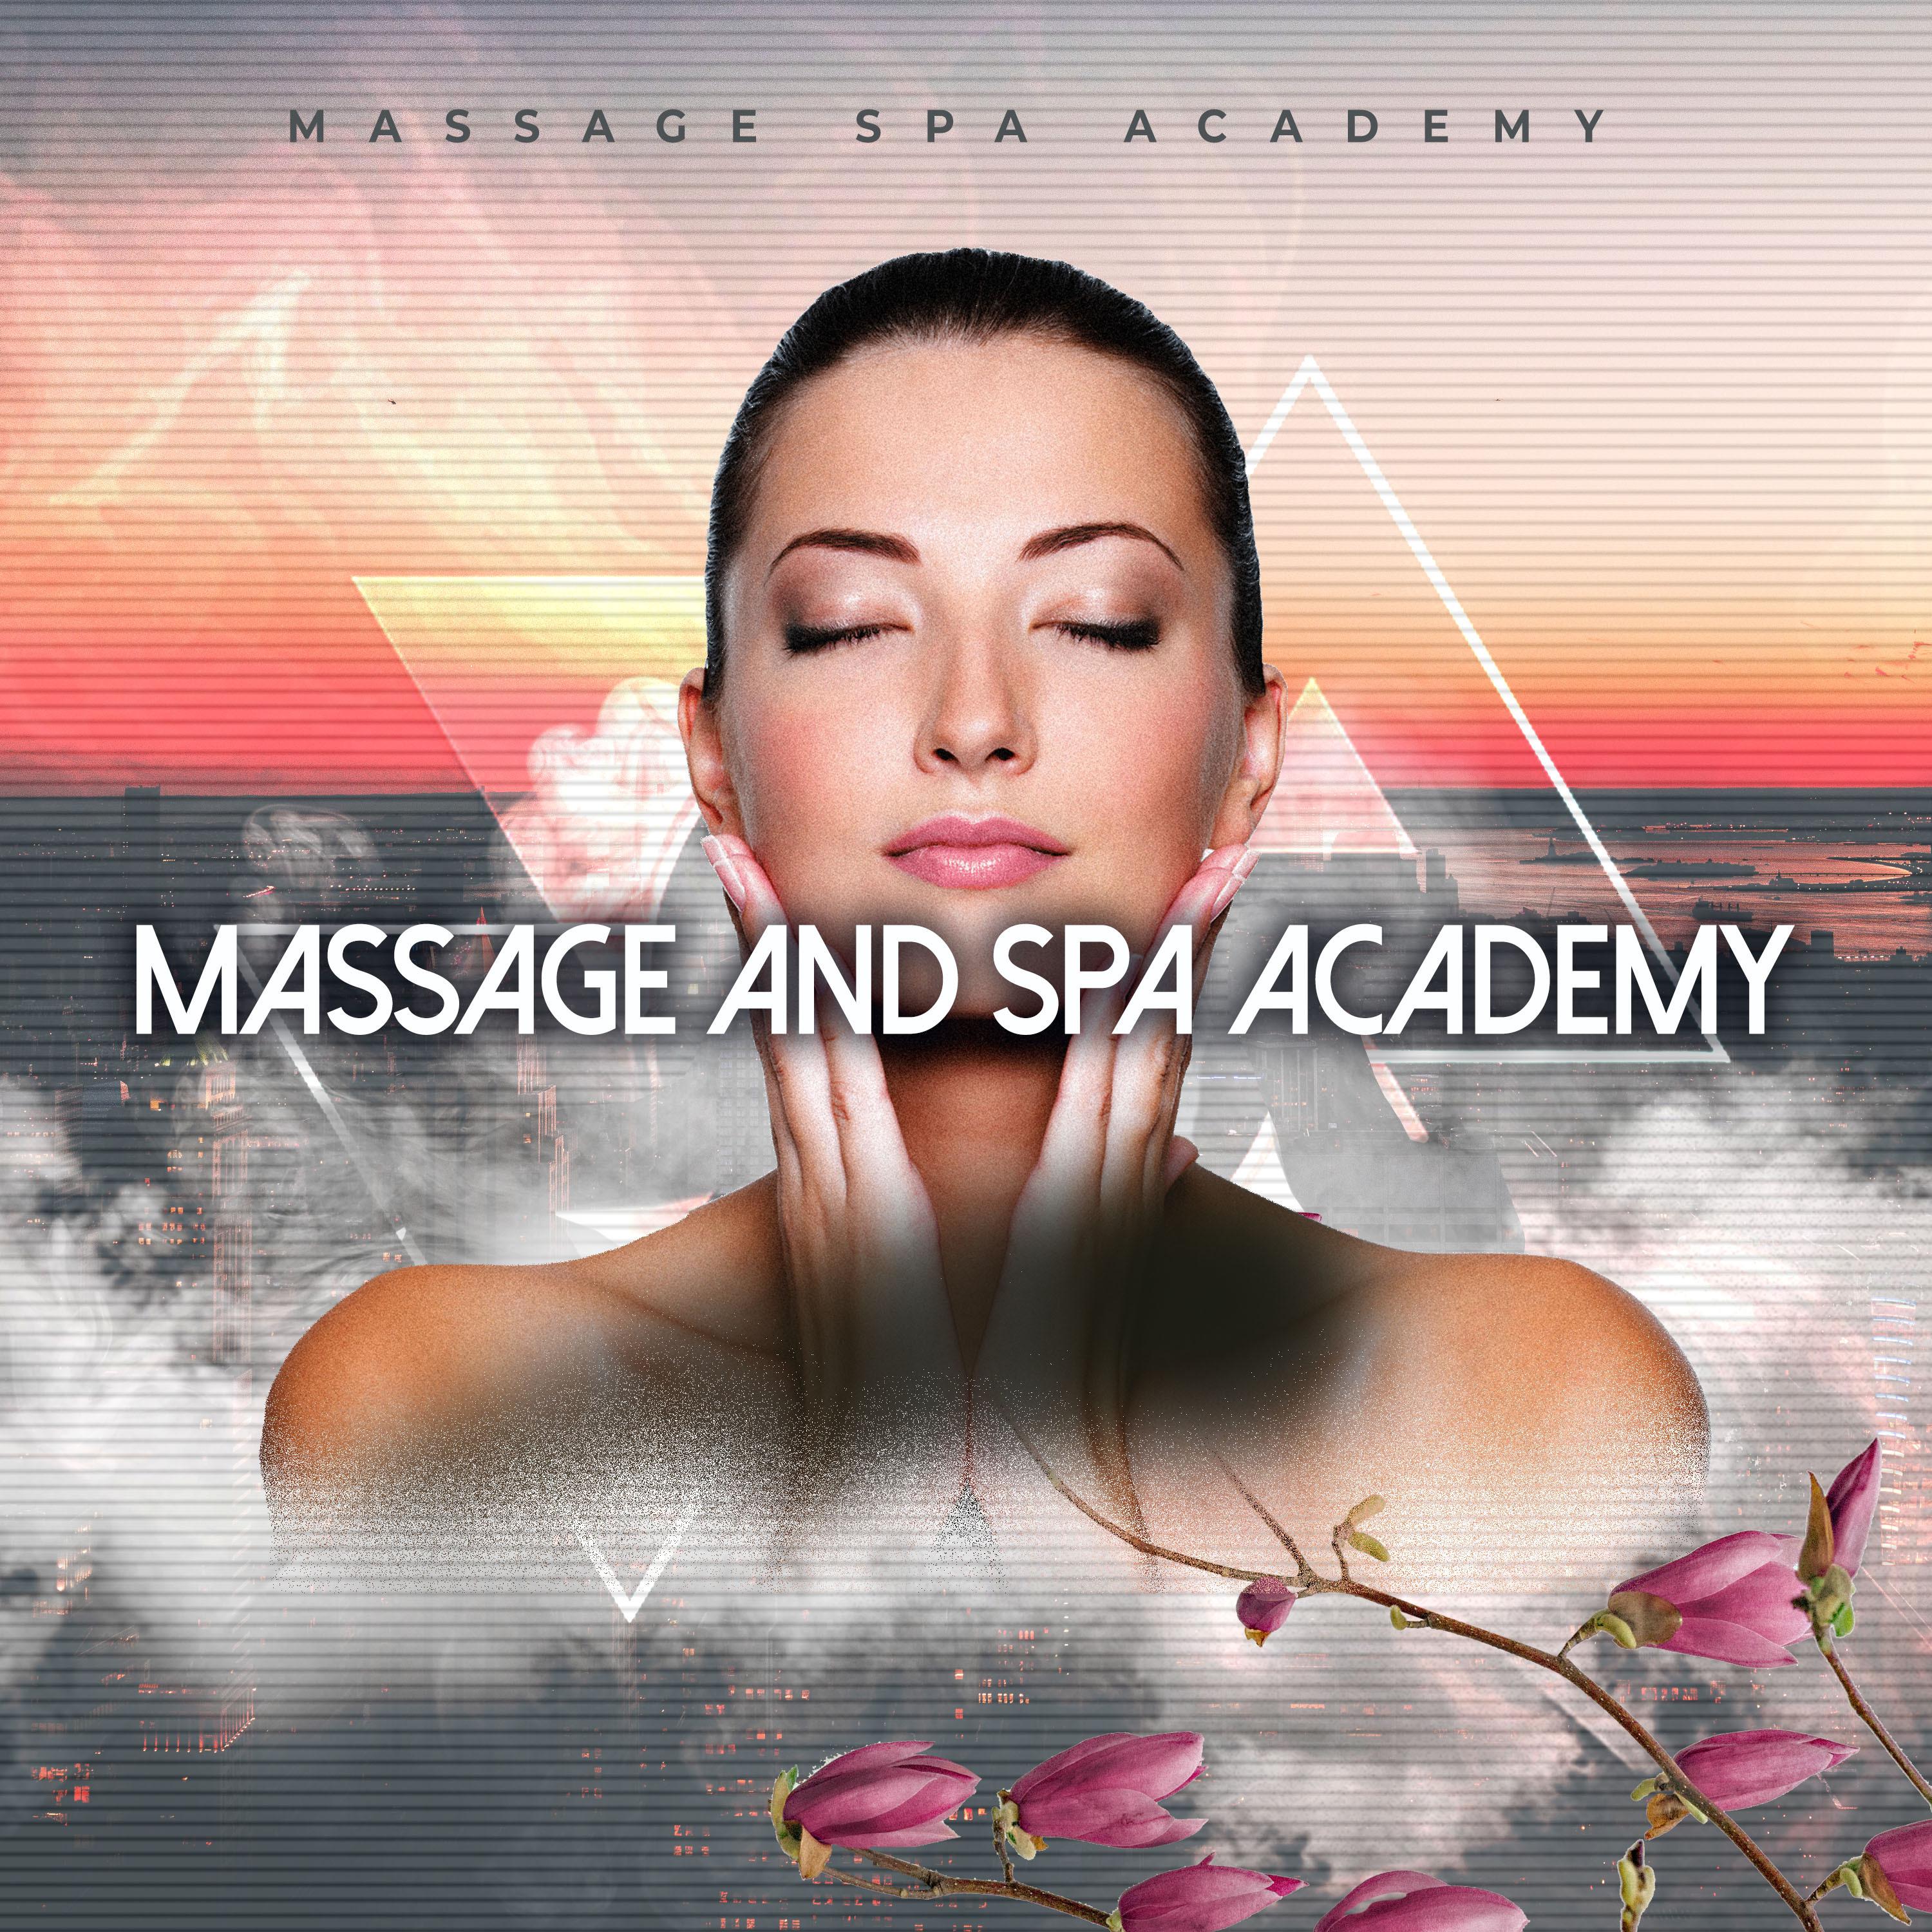 Massage and Spa Academy